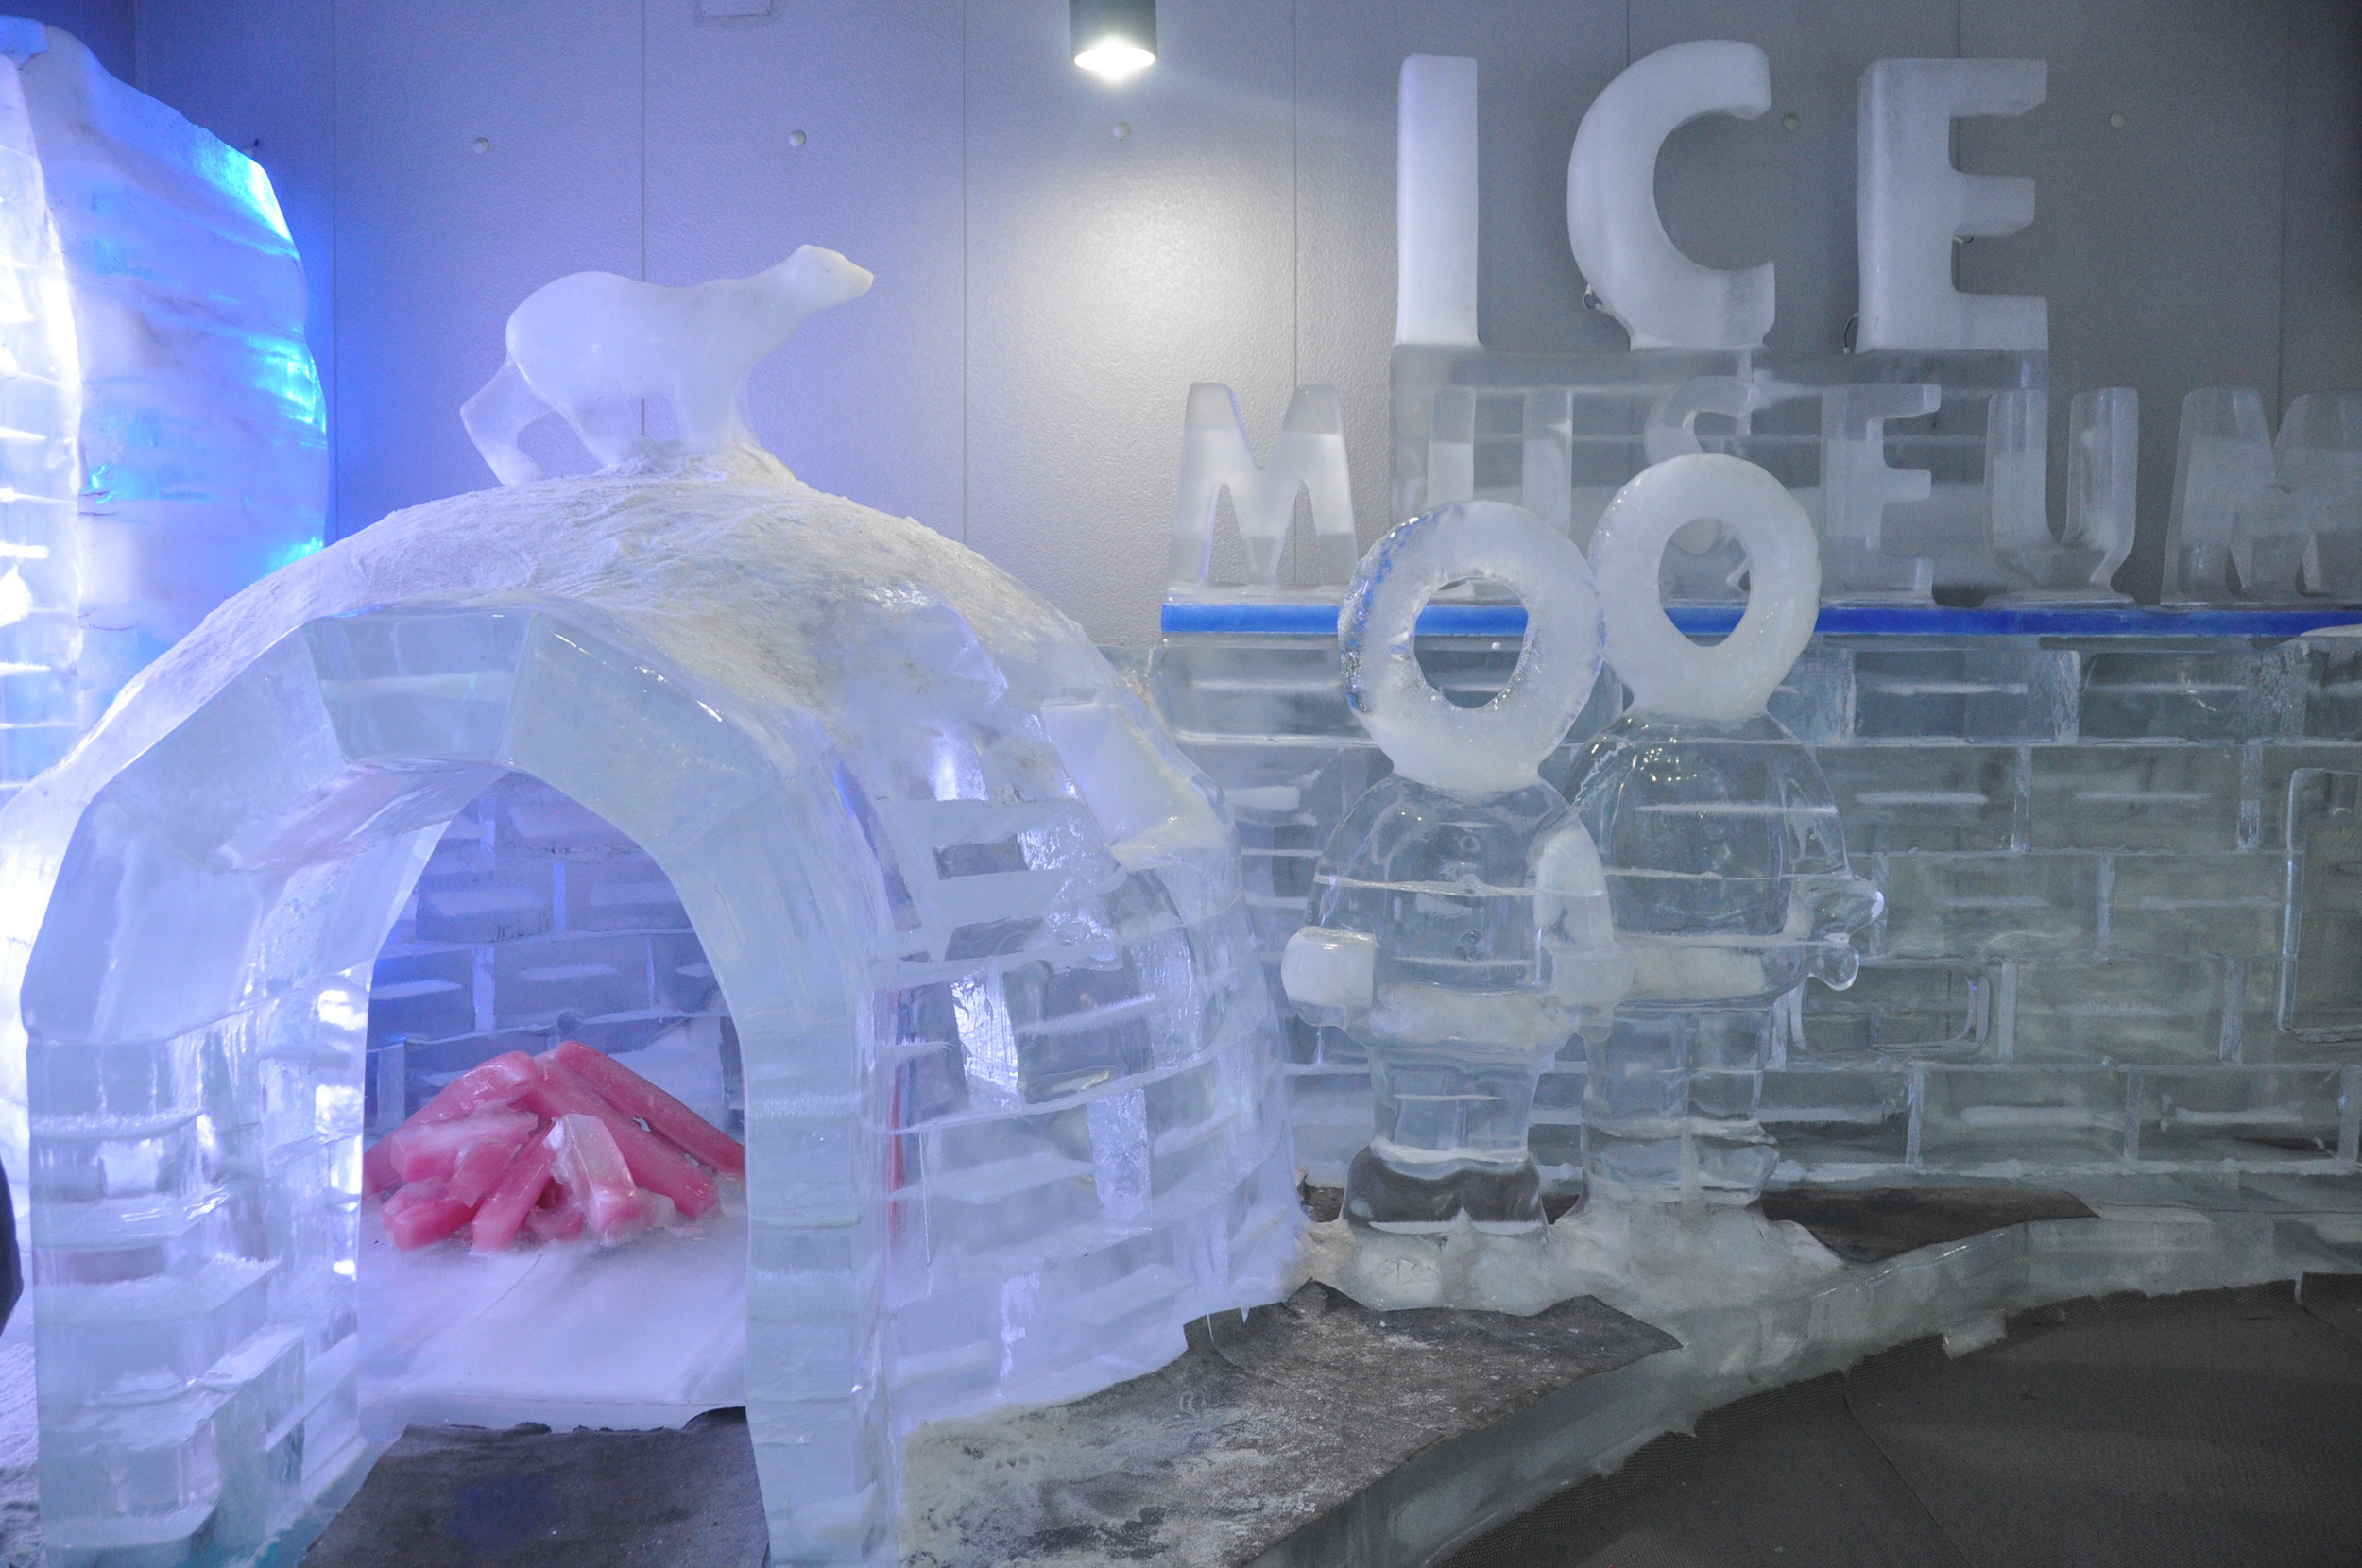 Seoul Trick Eye Museum Korea Ice